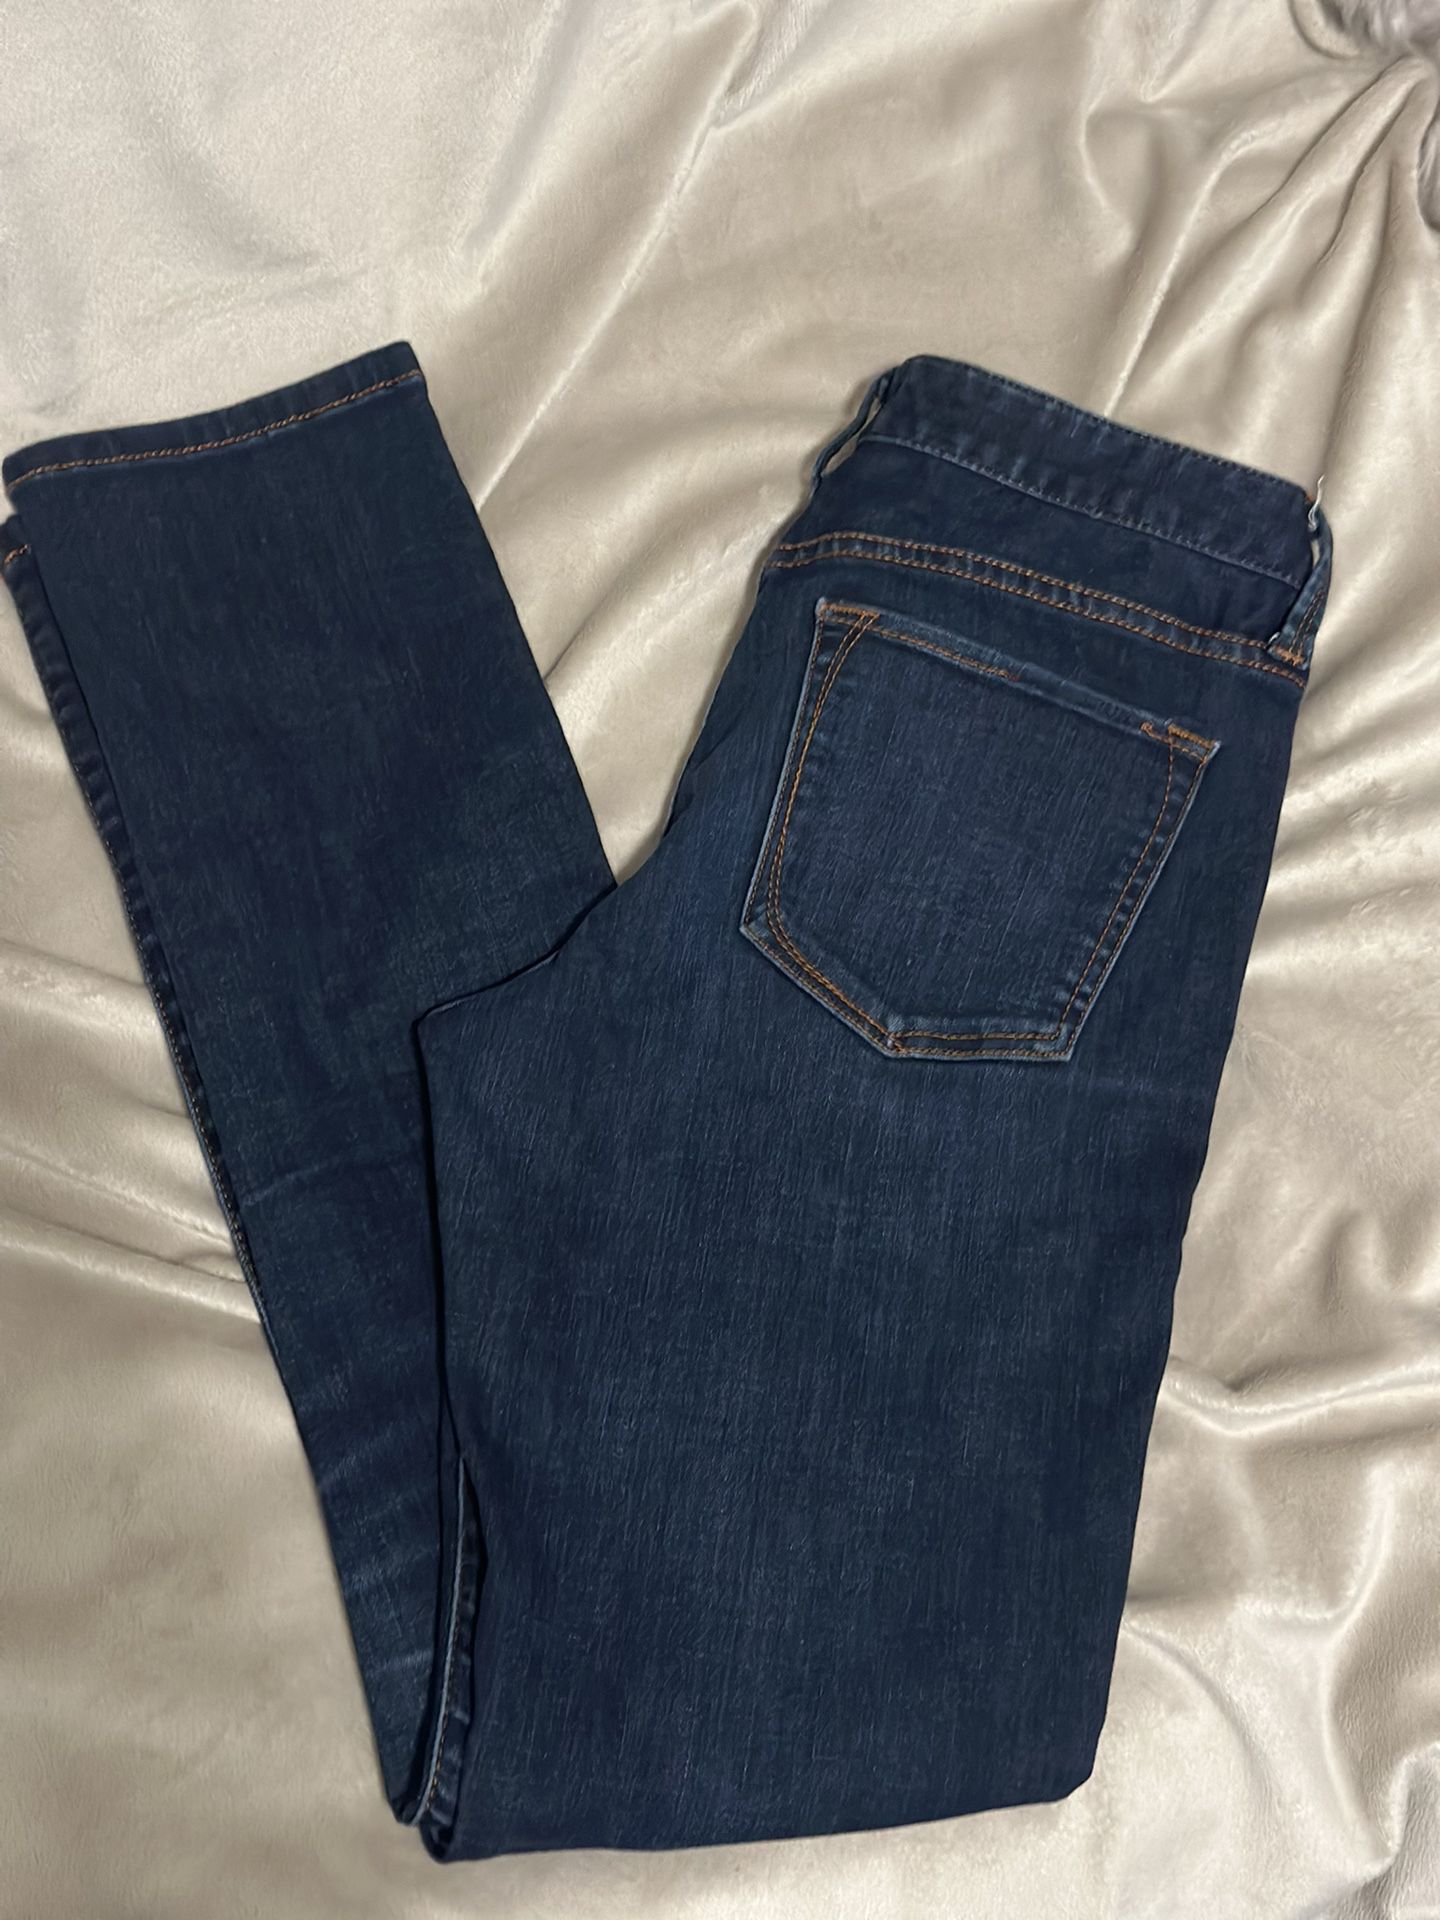 Like New- Banana Republic- 27P skinny jeans 